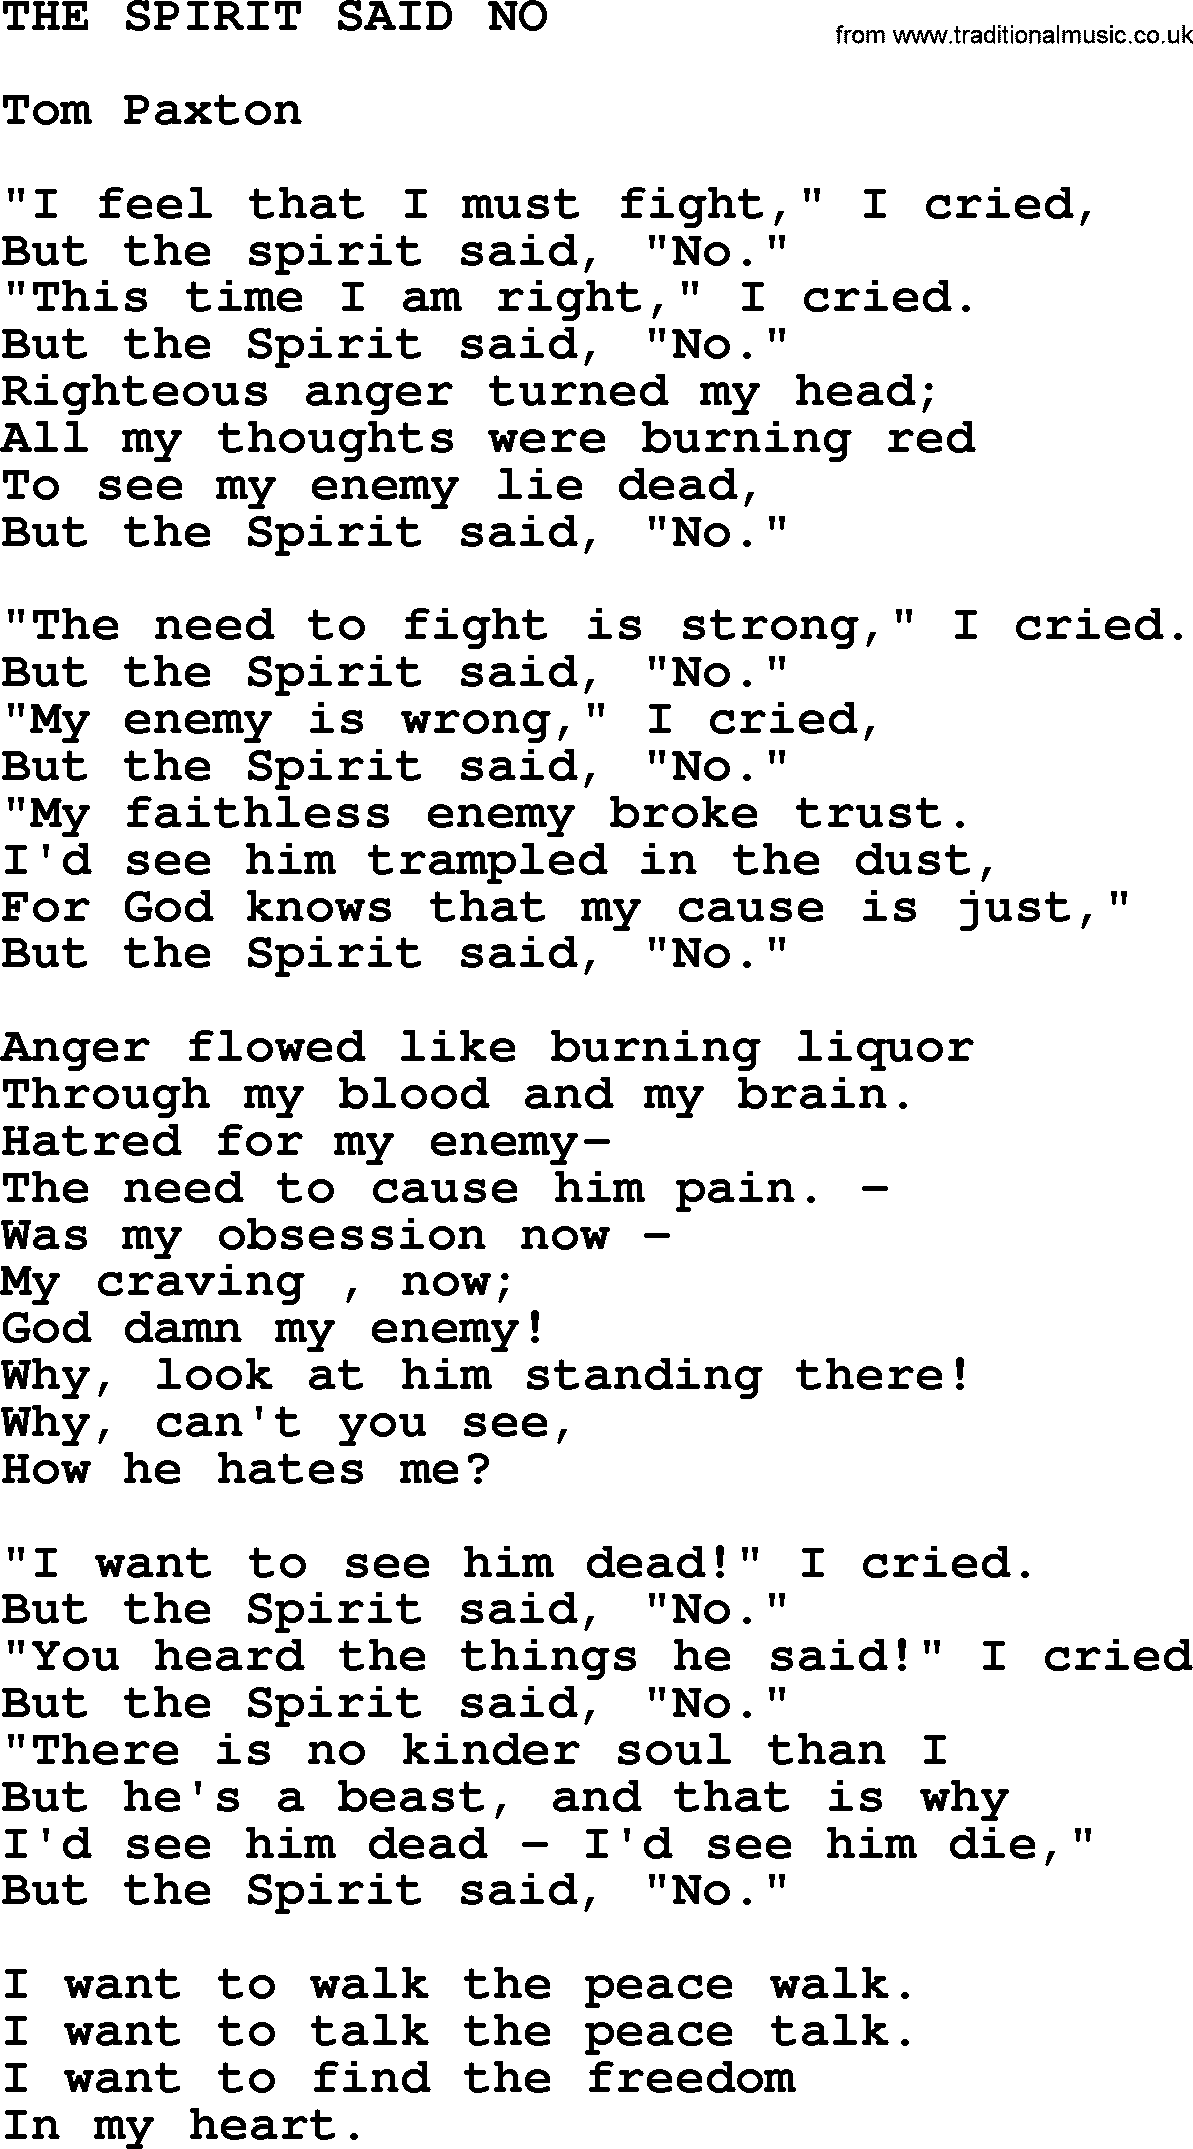 Tom Paxton song: The Spirit Said No, lyrics